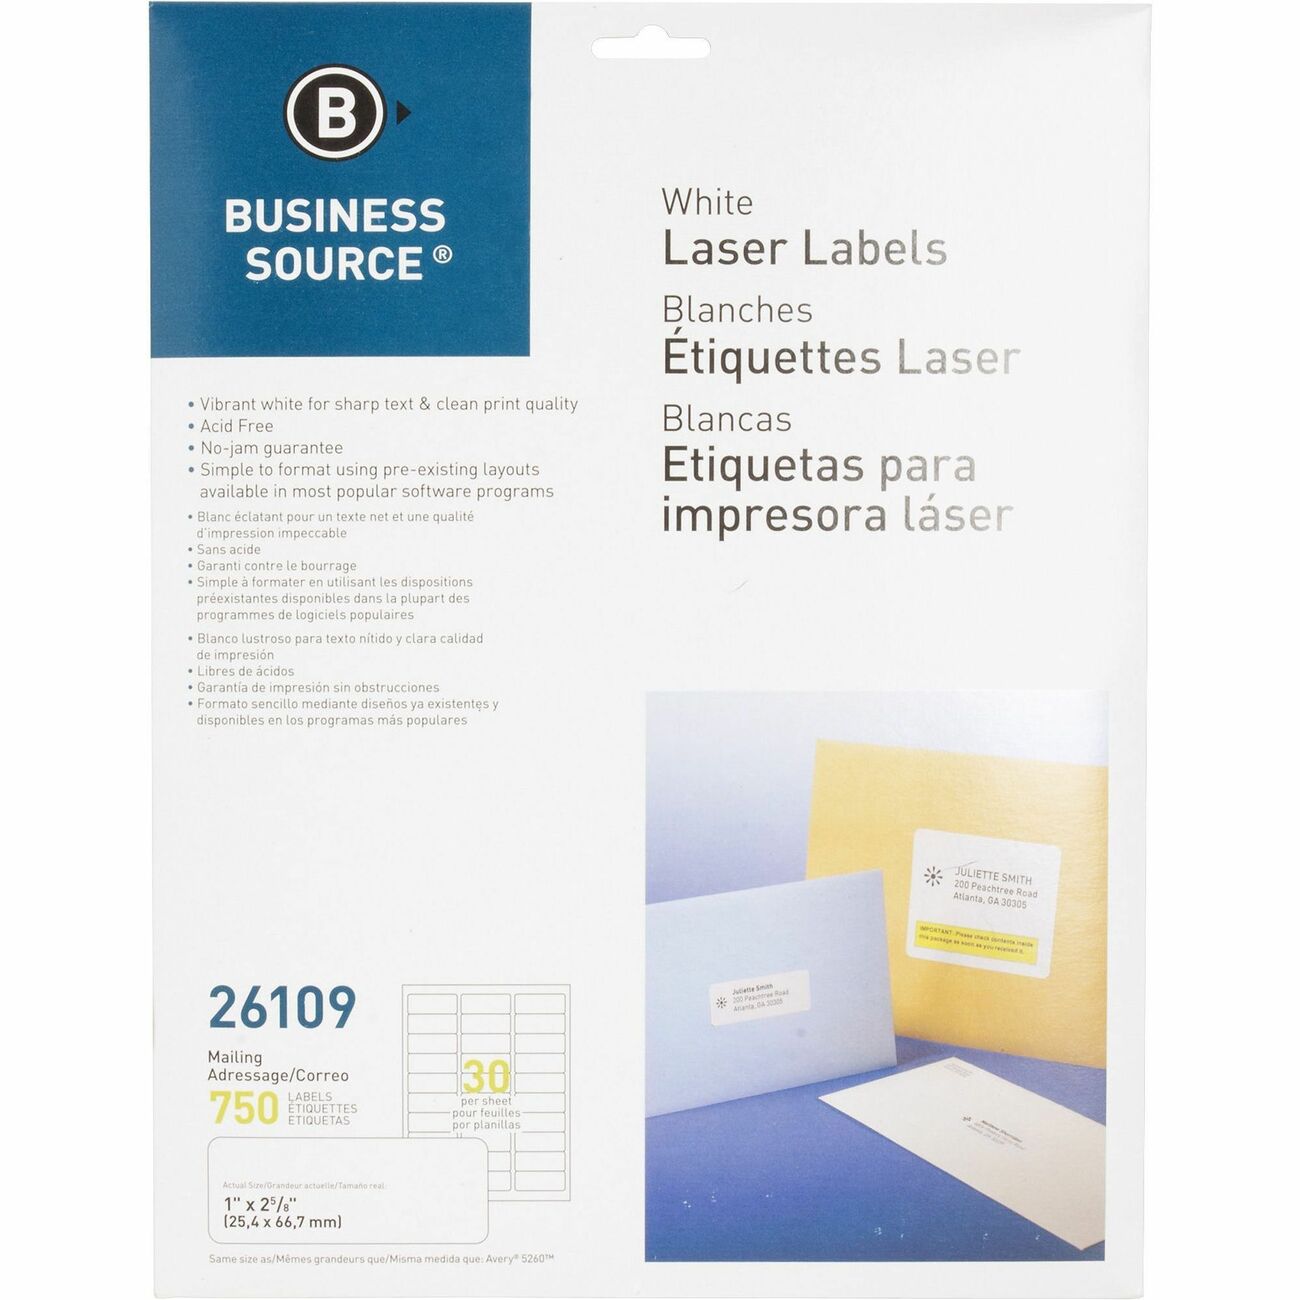 business-source-white-laser-labels-21050-template-vestlinoa